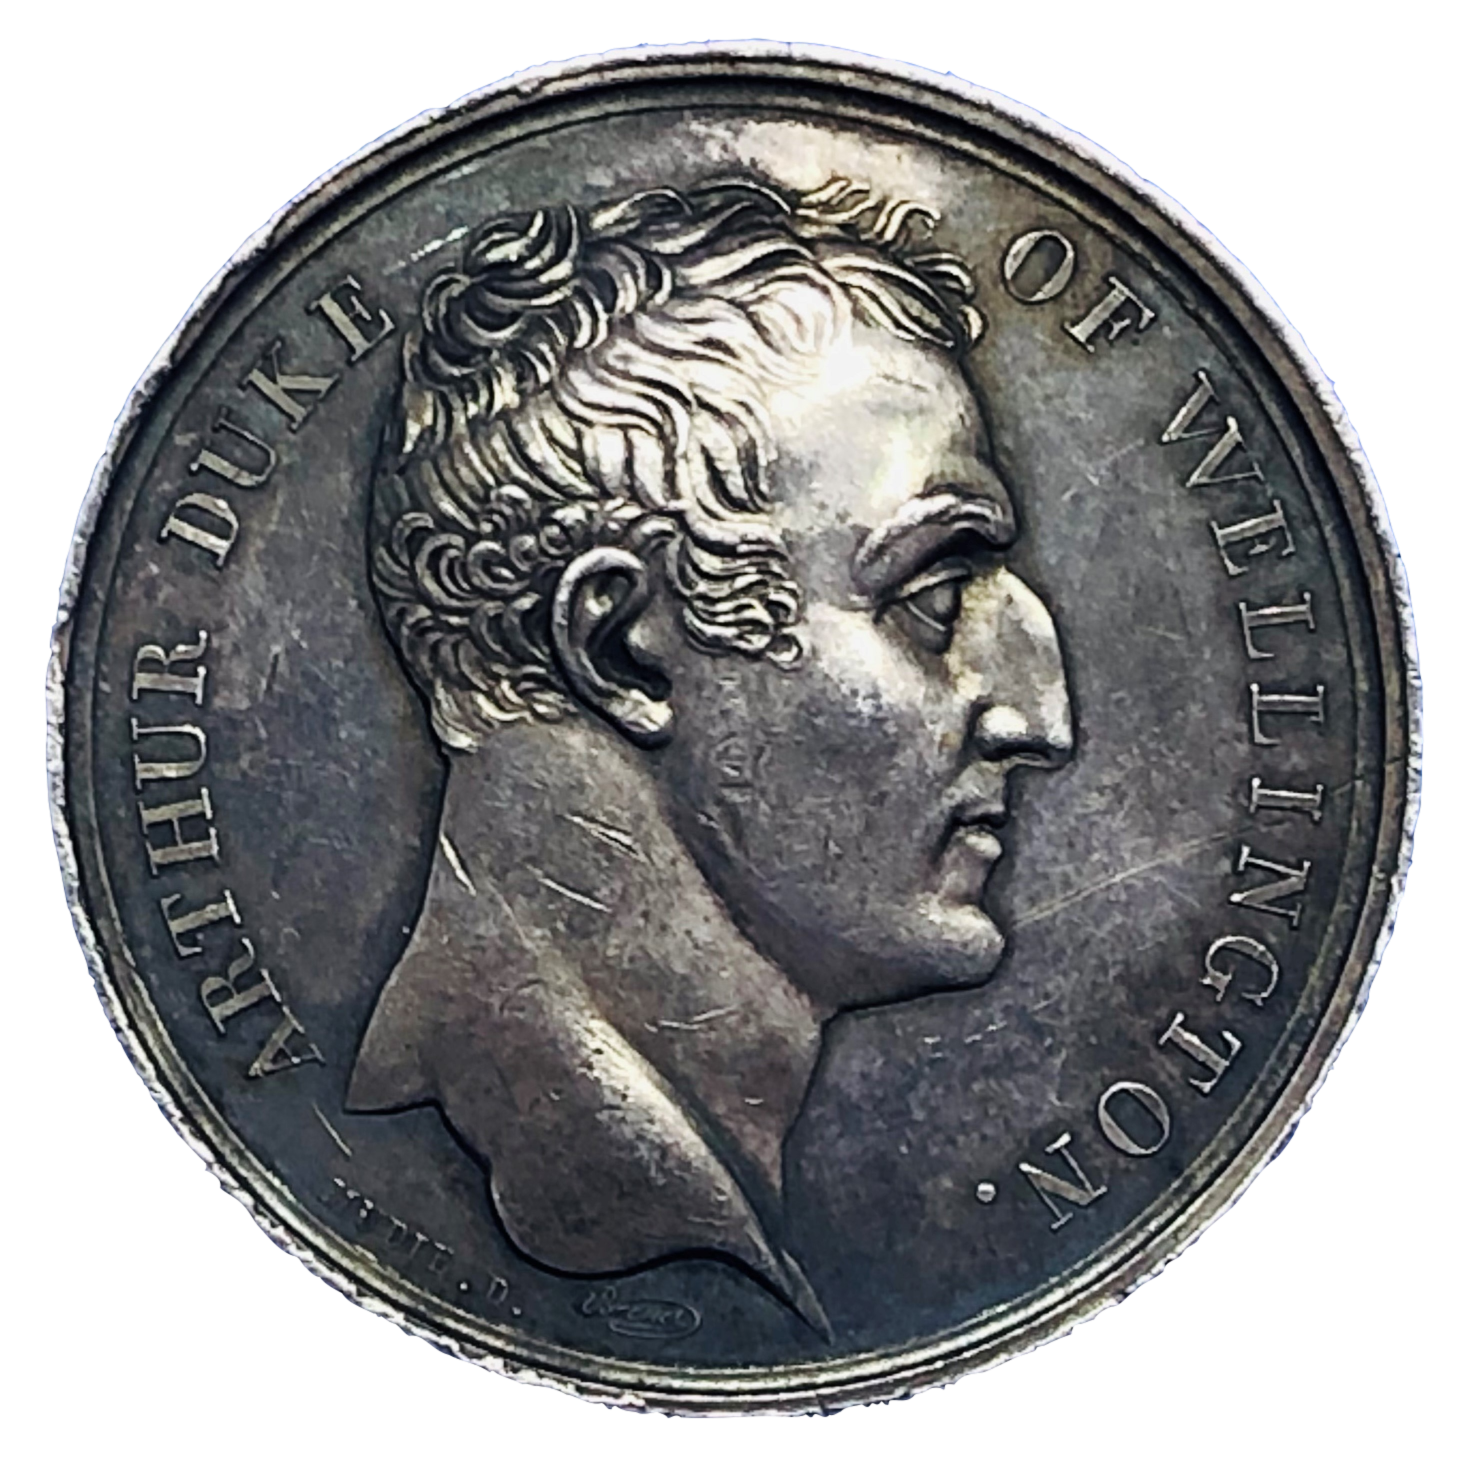 1809 Passage of Druro, Portugal Historical Medallion by Brenet/Dubois Obverse